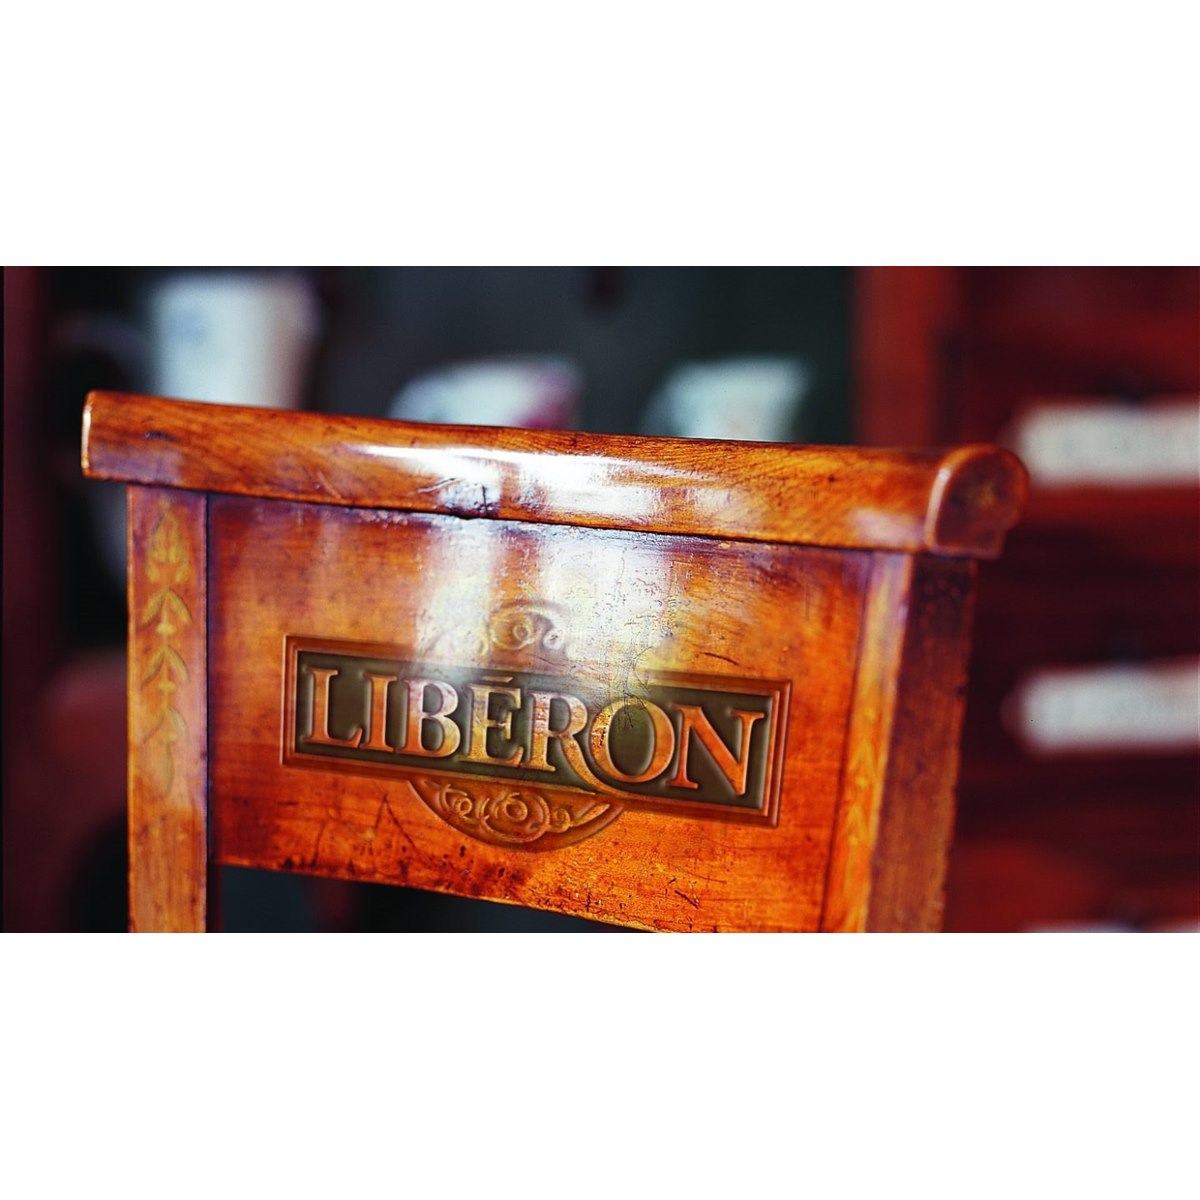 Where to Buy Liberon